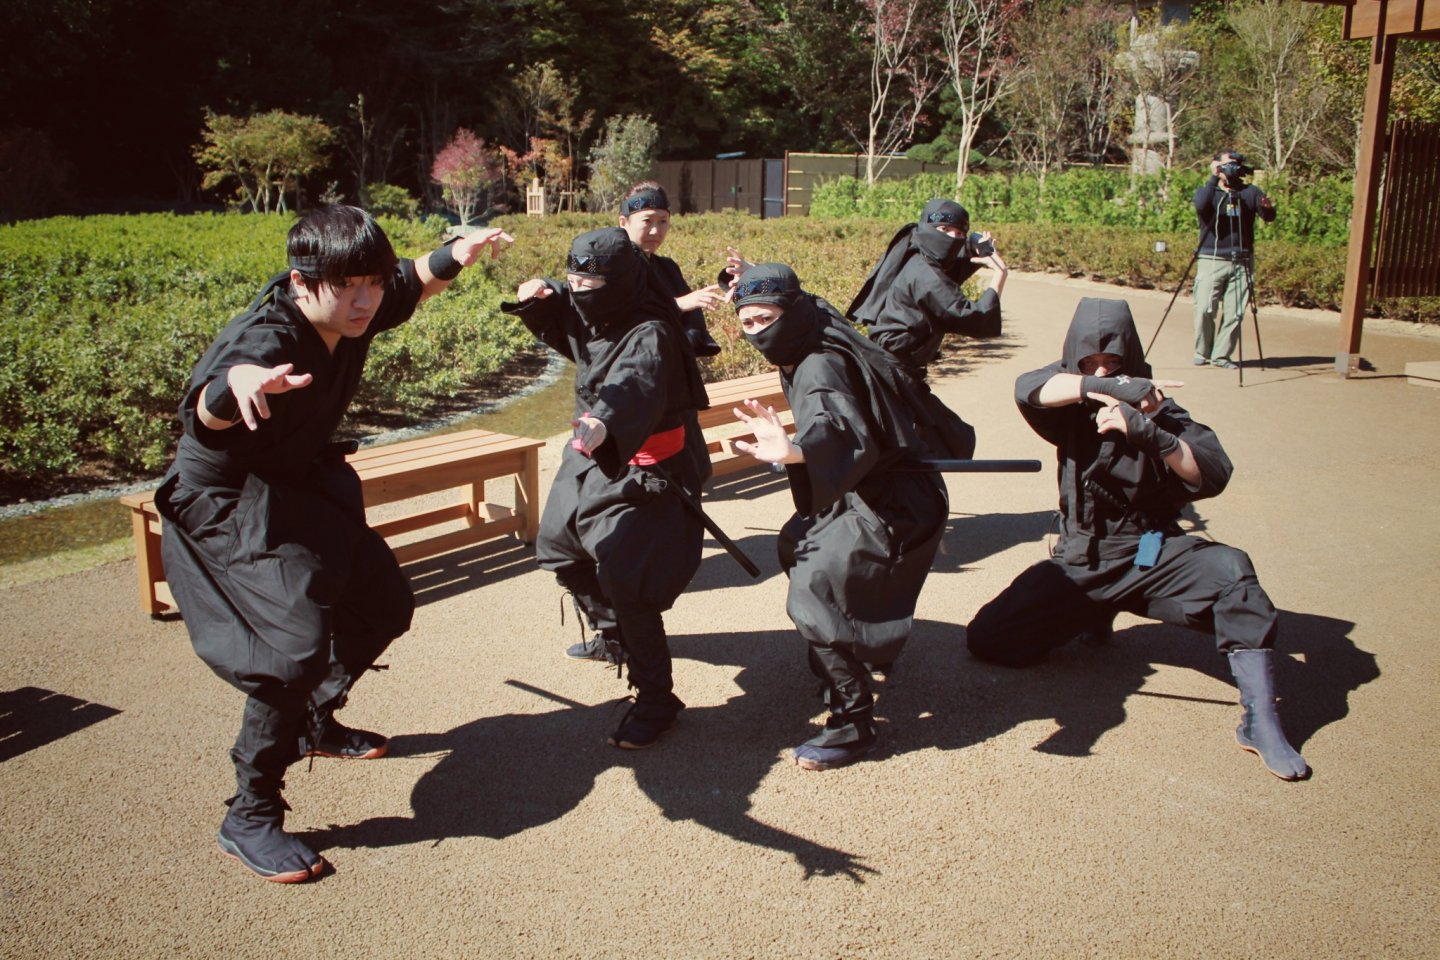 A ninja performance